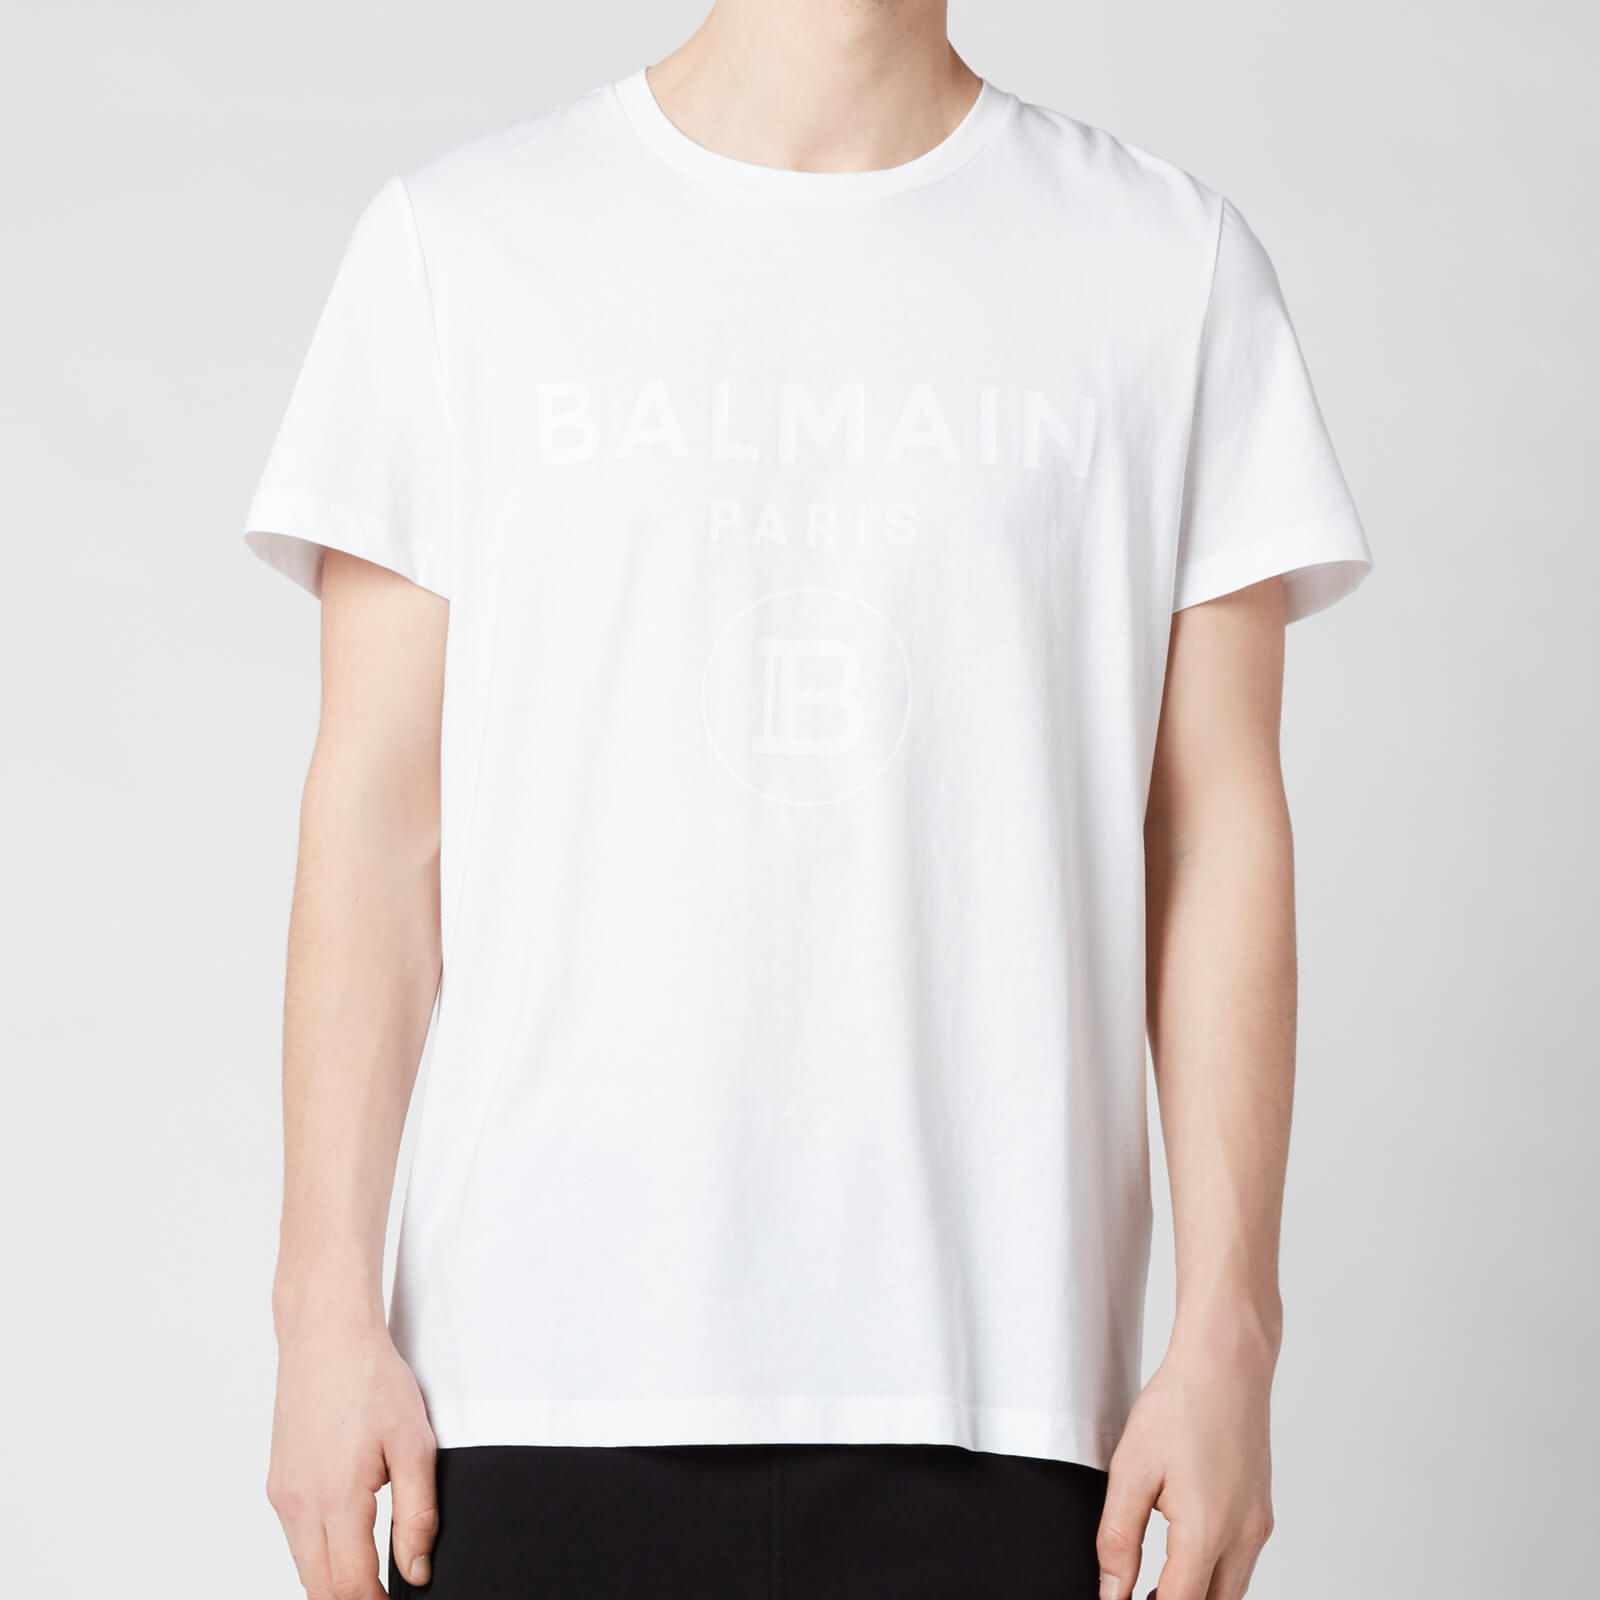 Balmain Men's Printed T-Shirt - White - S